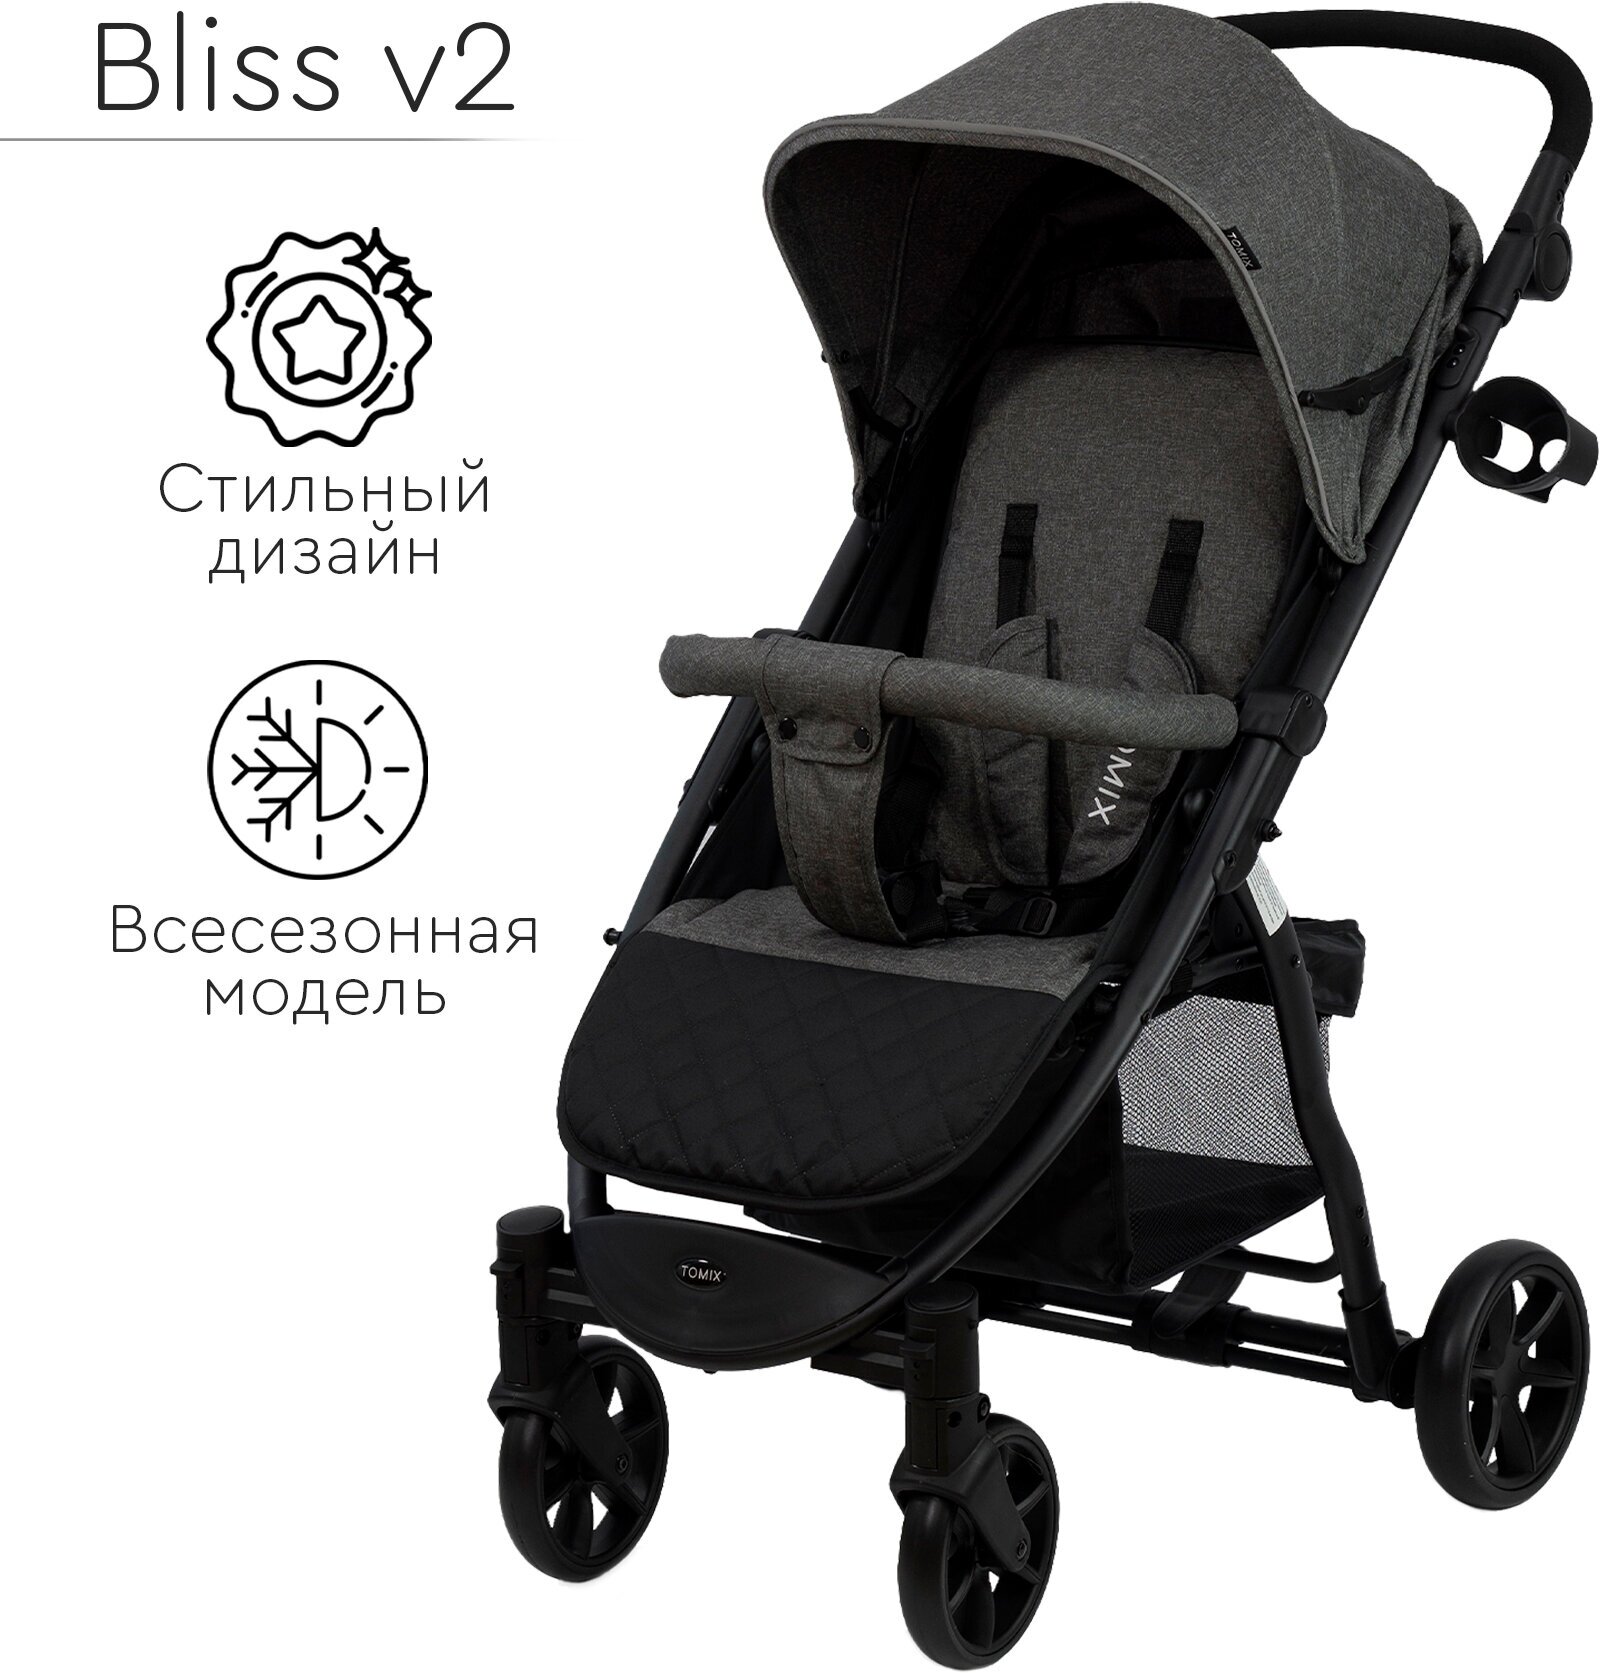 Прогулочная коляска Bliss V2 в интернет-магазине по низкой цене Яндекс Маркете